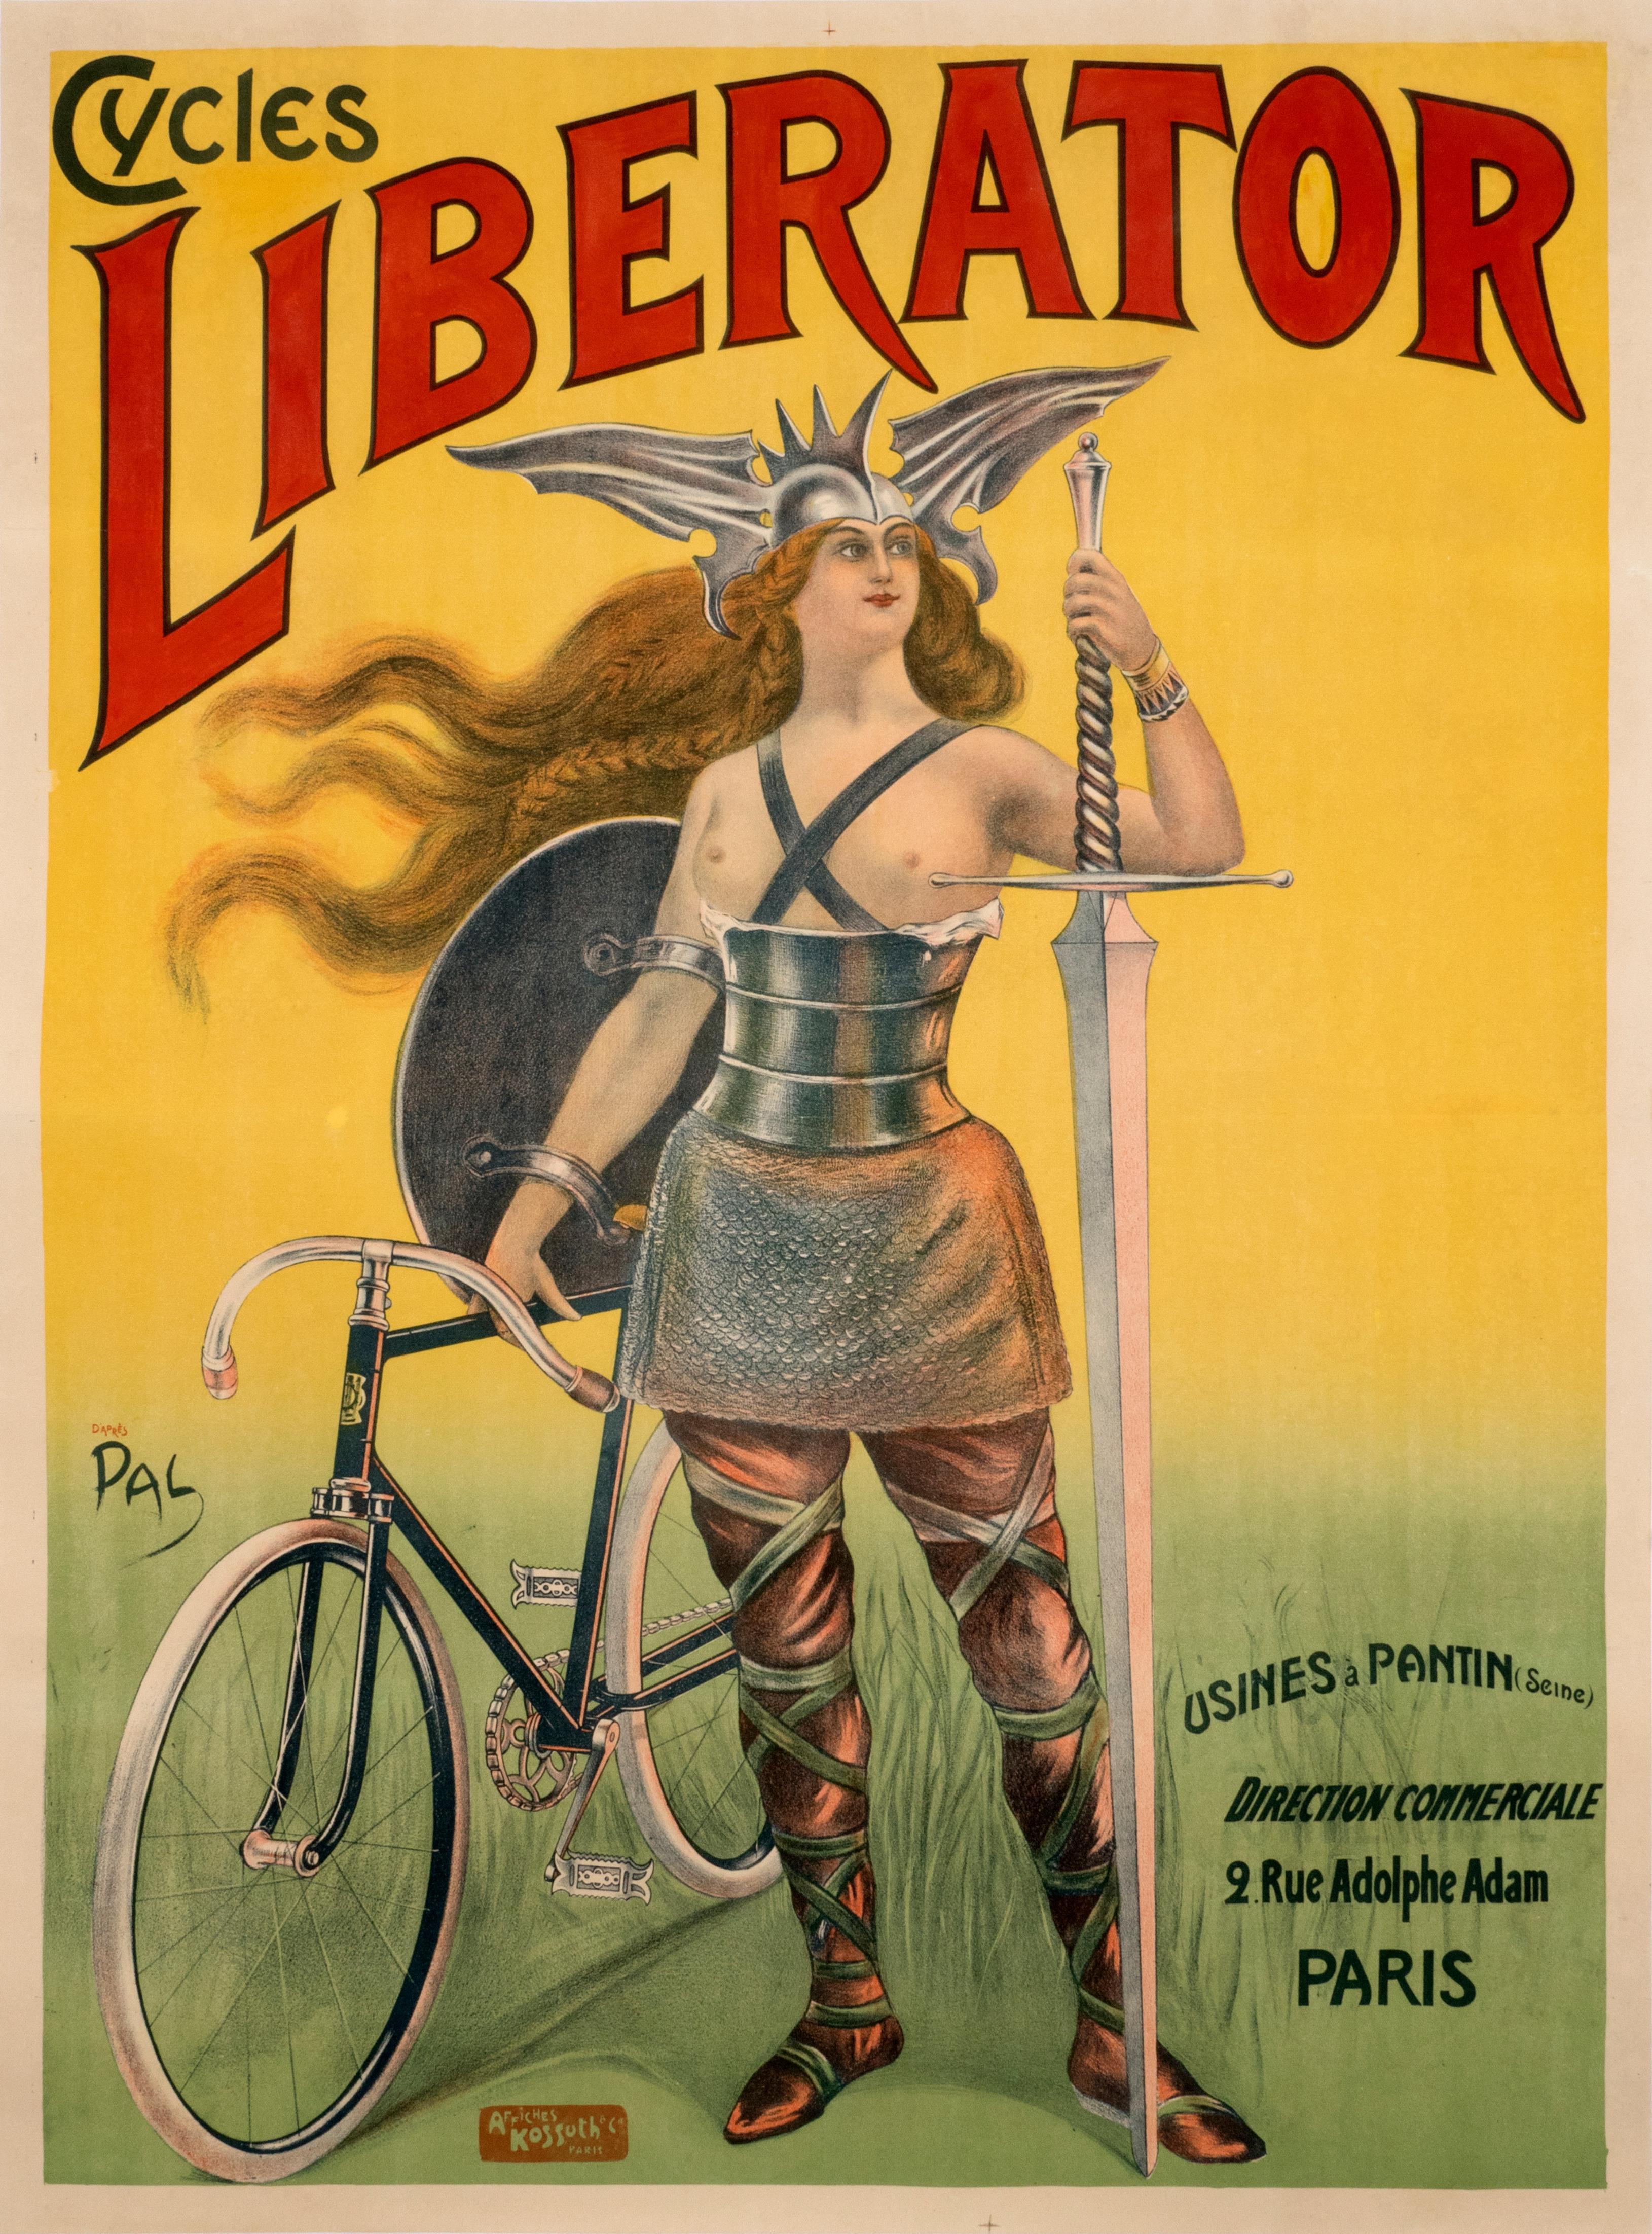 "Cycles Liberator" Original Vintage Bicycle Poster 1900 - Print by Pal (Jean de Paléologue)